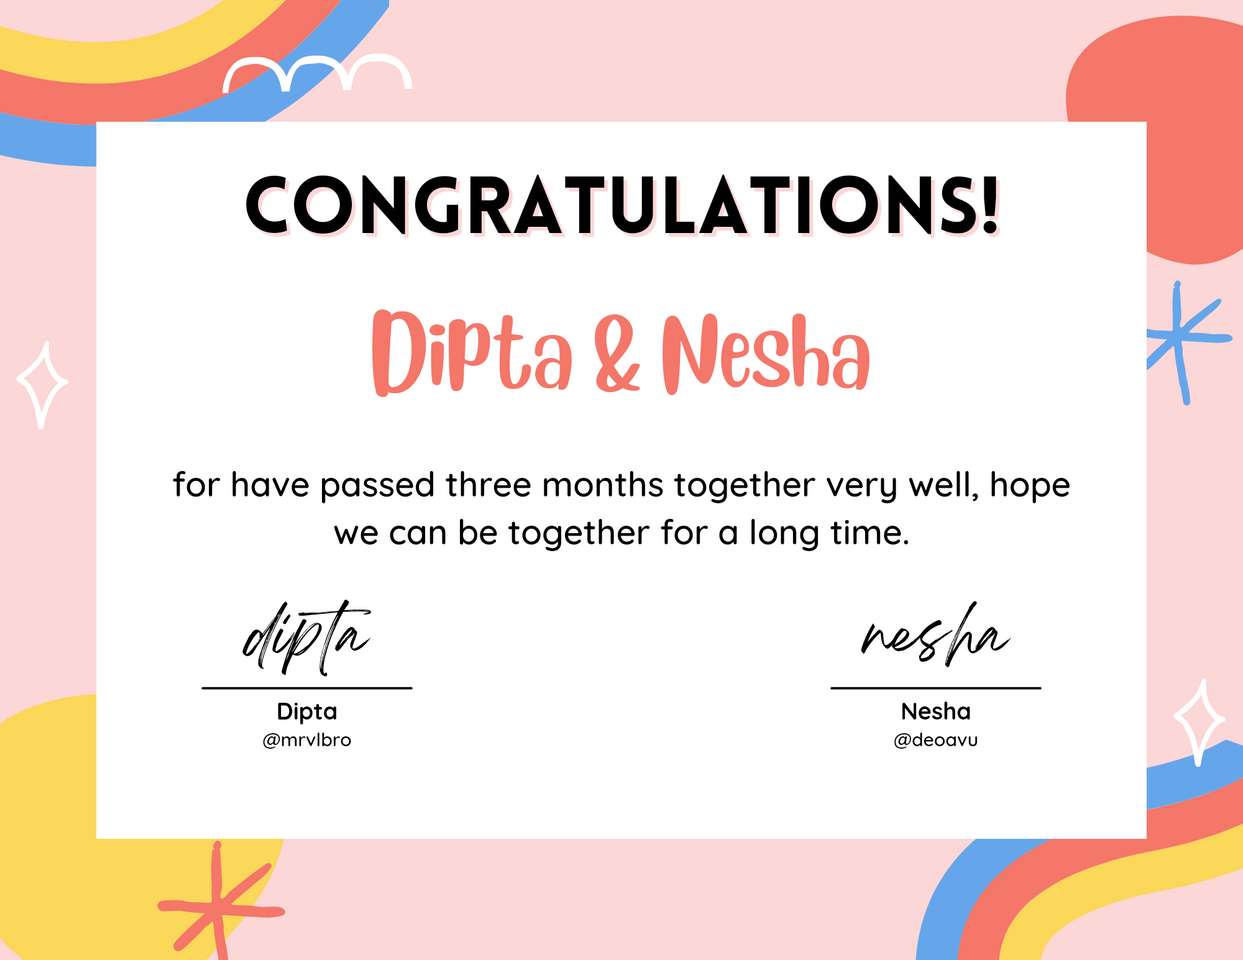 Dipta i Nesha puzzle online ze zdjęcia